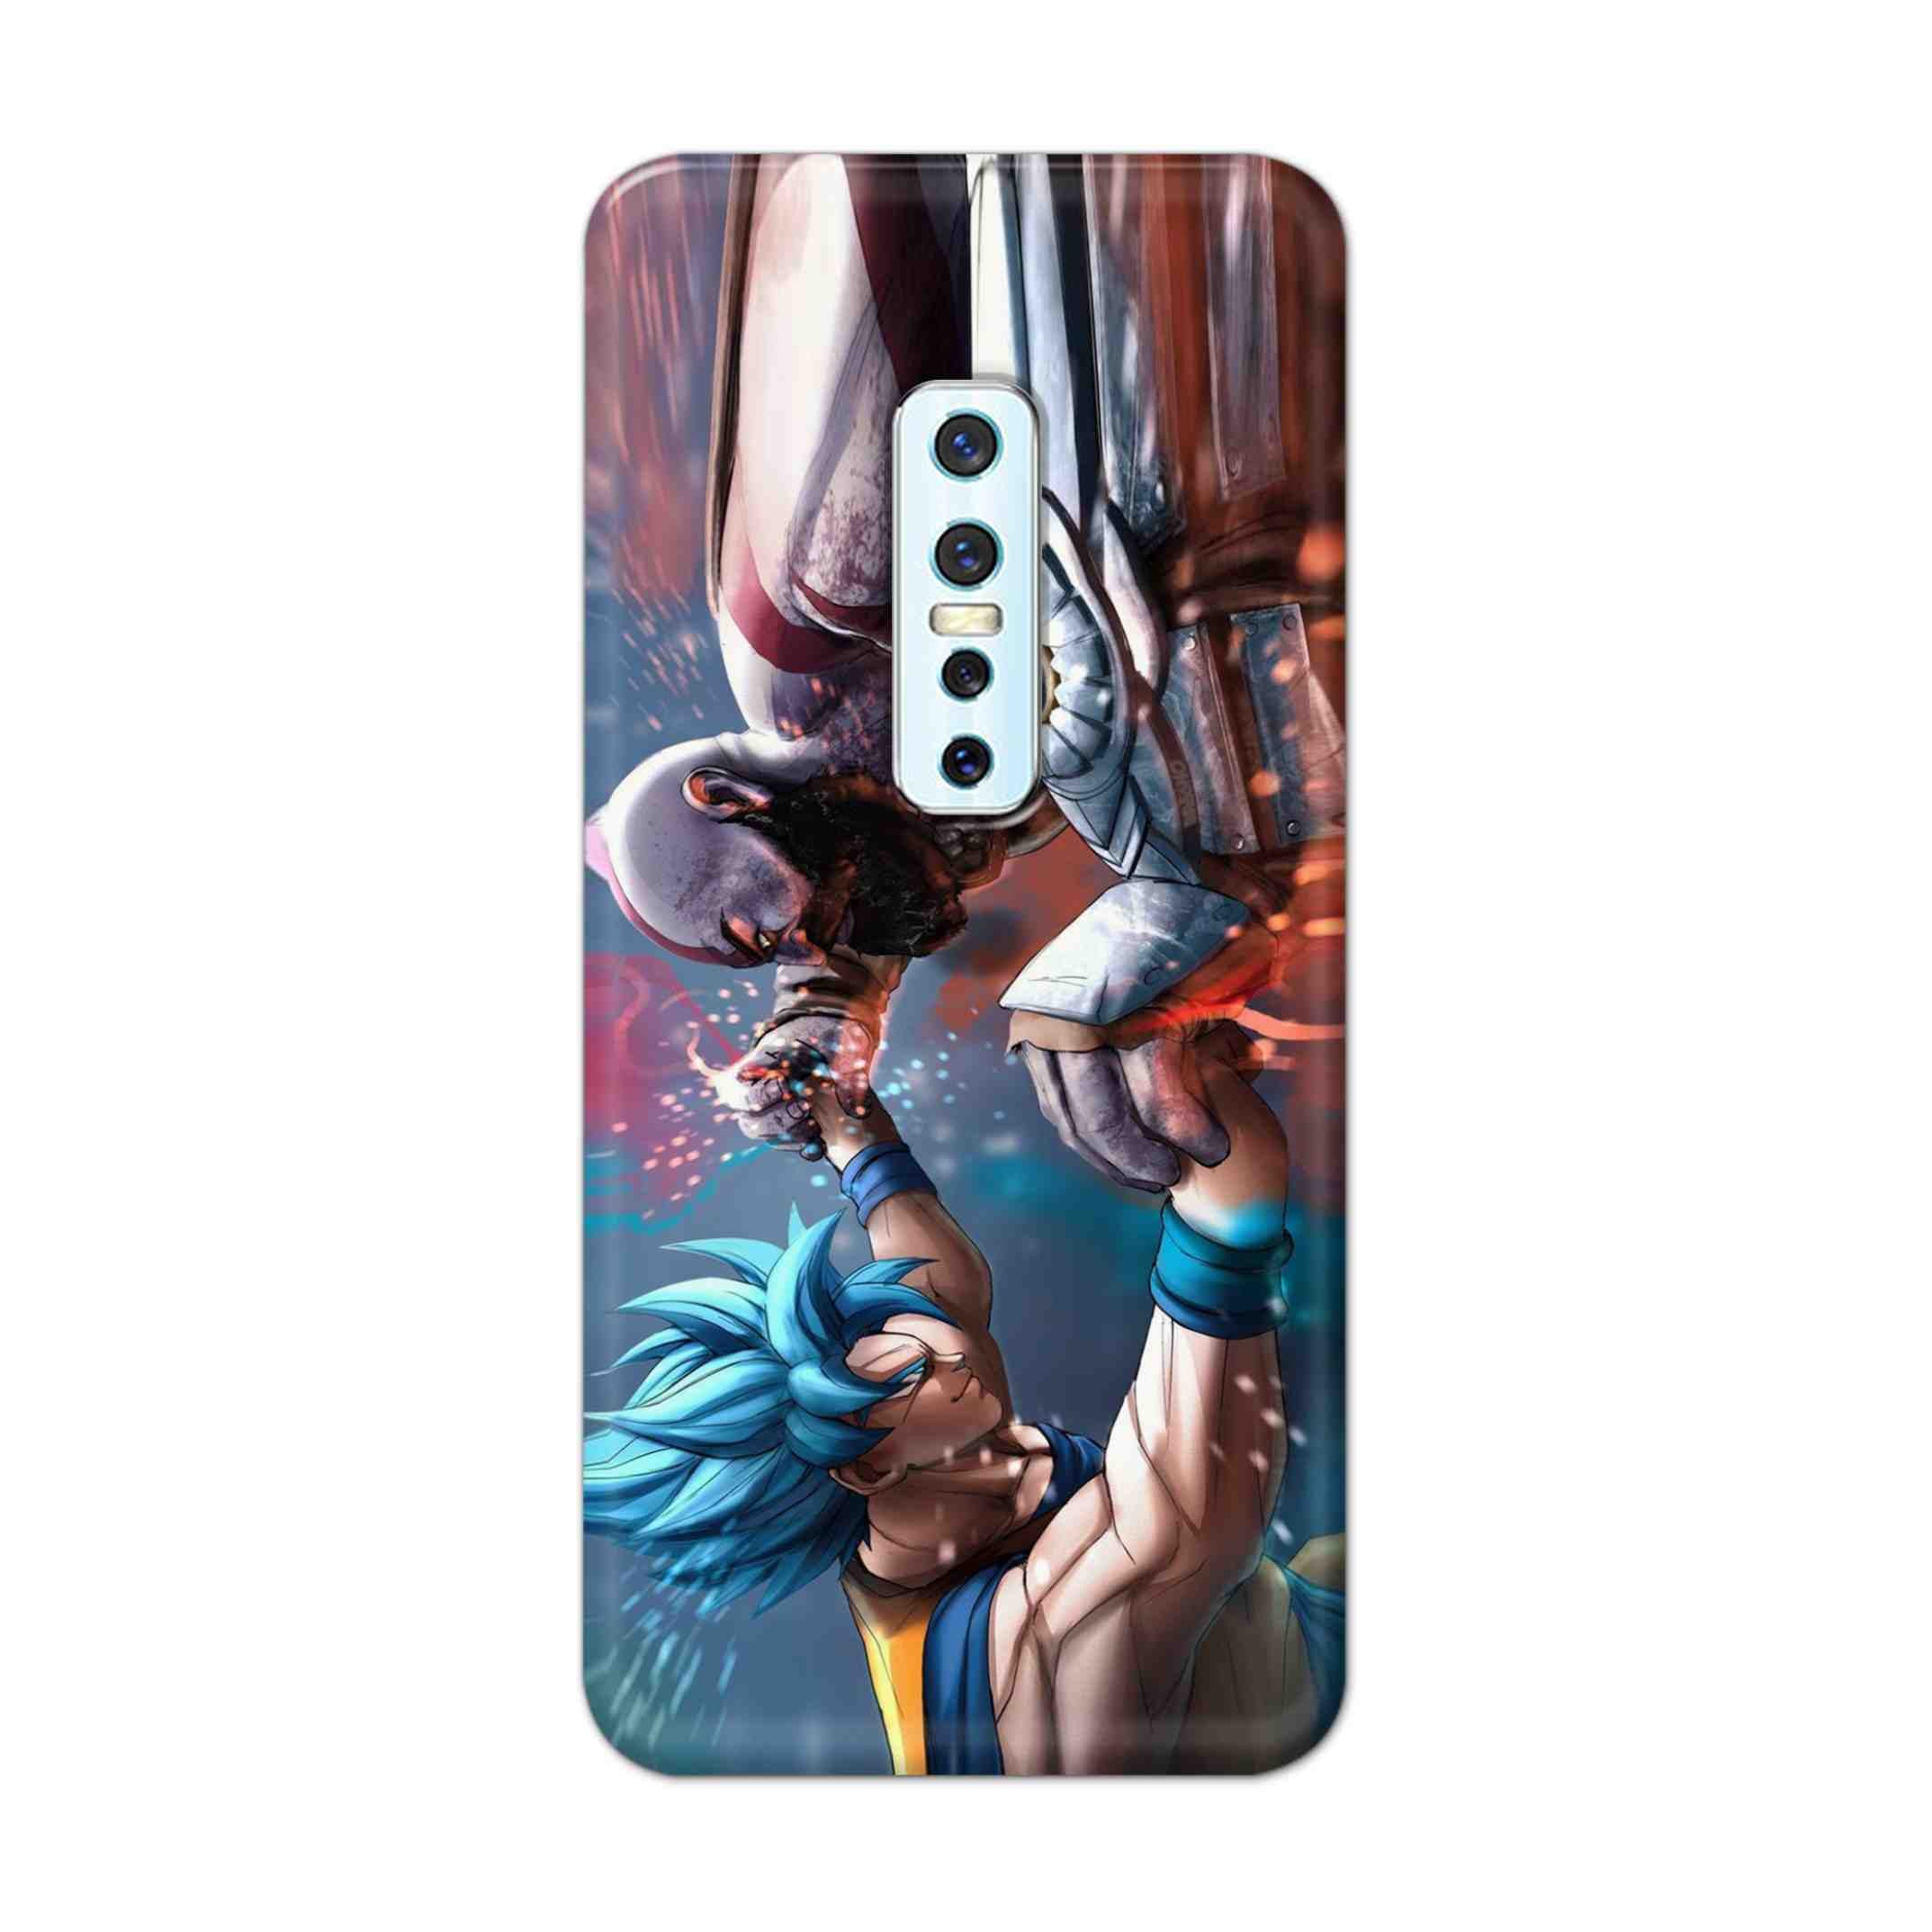 Buy Goku Vs Kratos Hard Back Mobile Phone Case Cover For Vivo V17 Pro Online